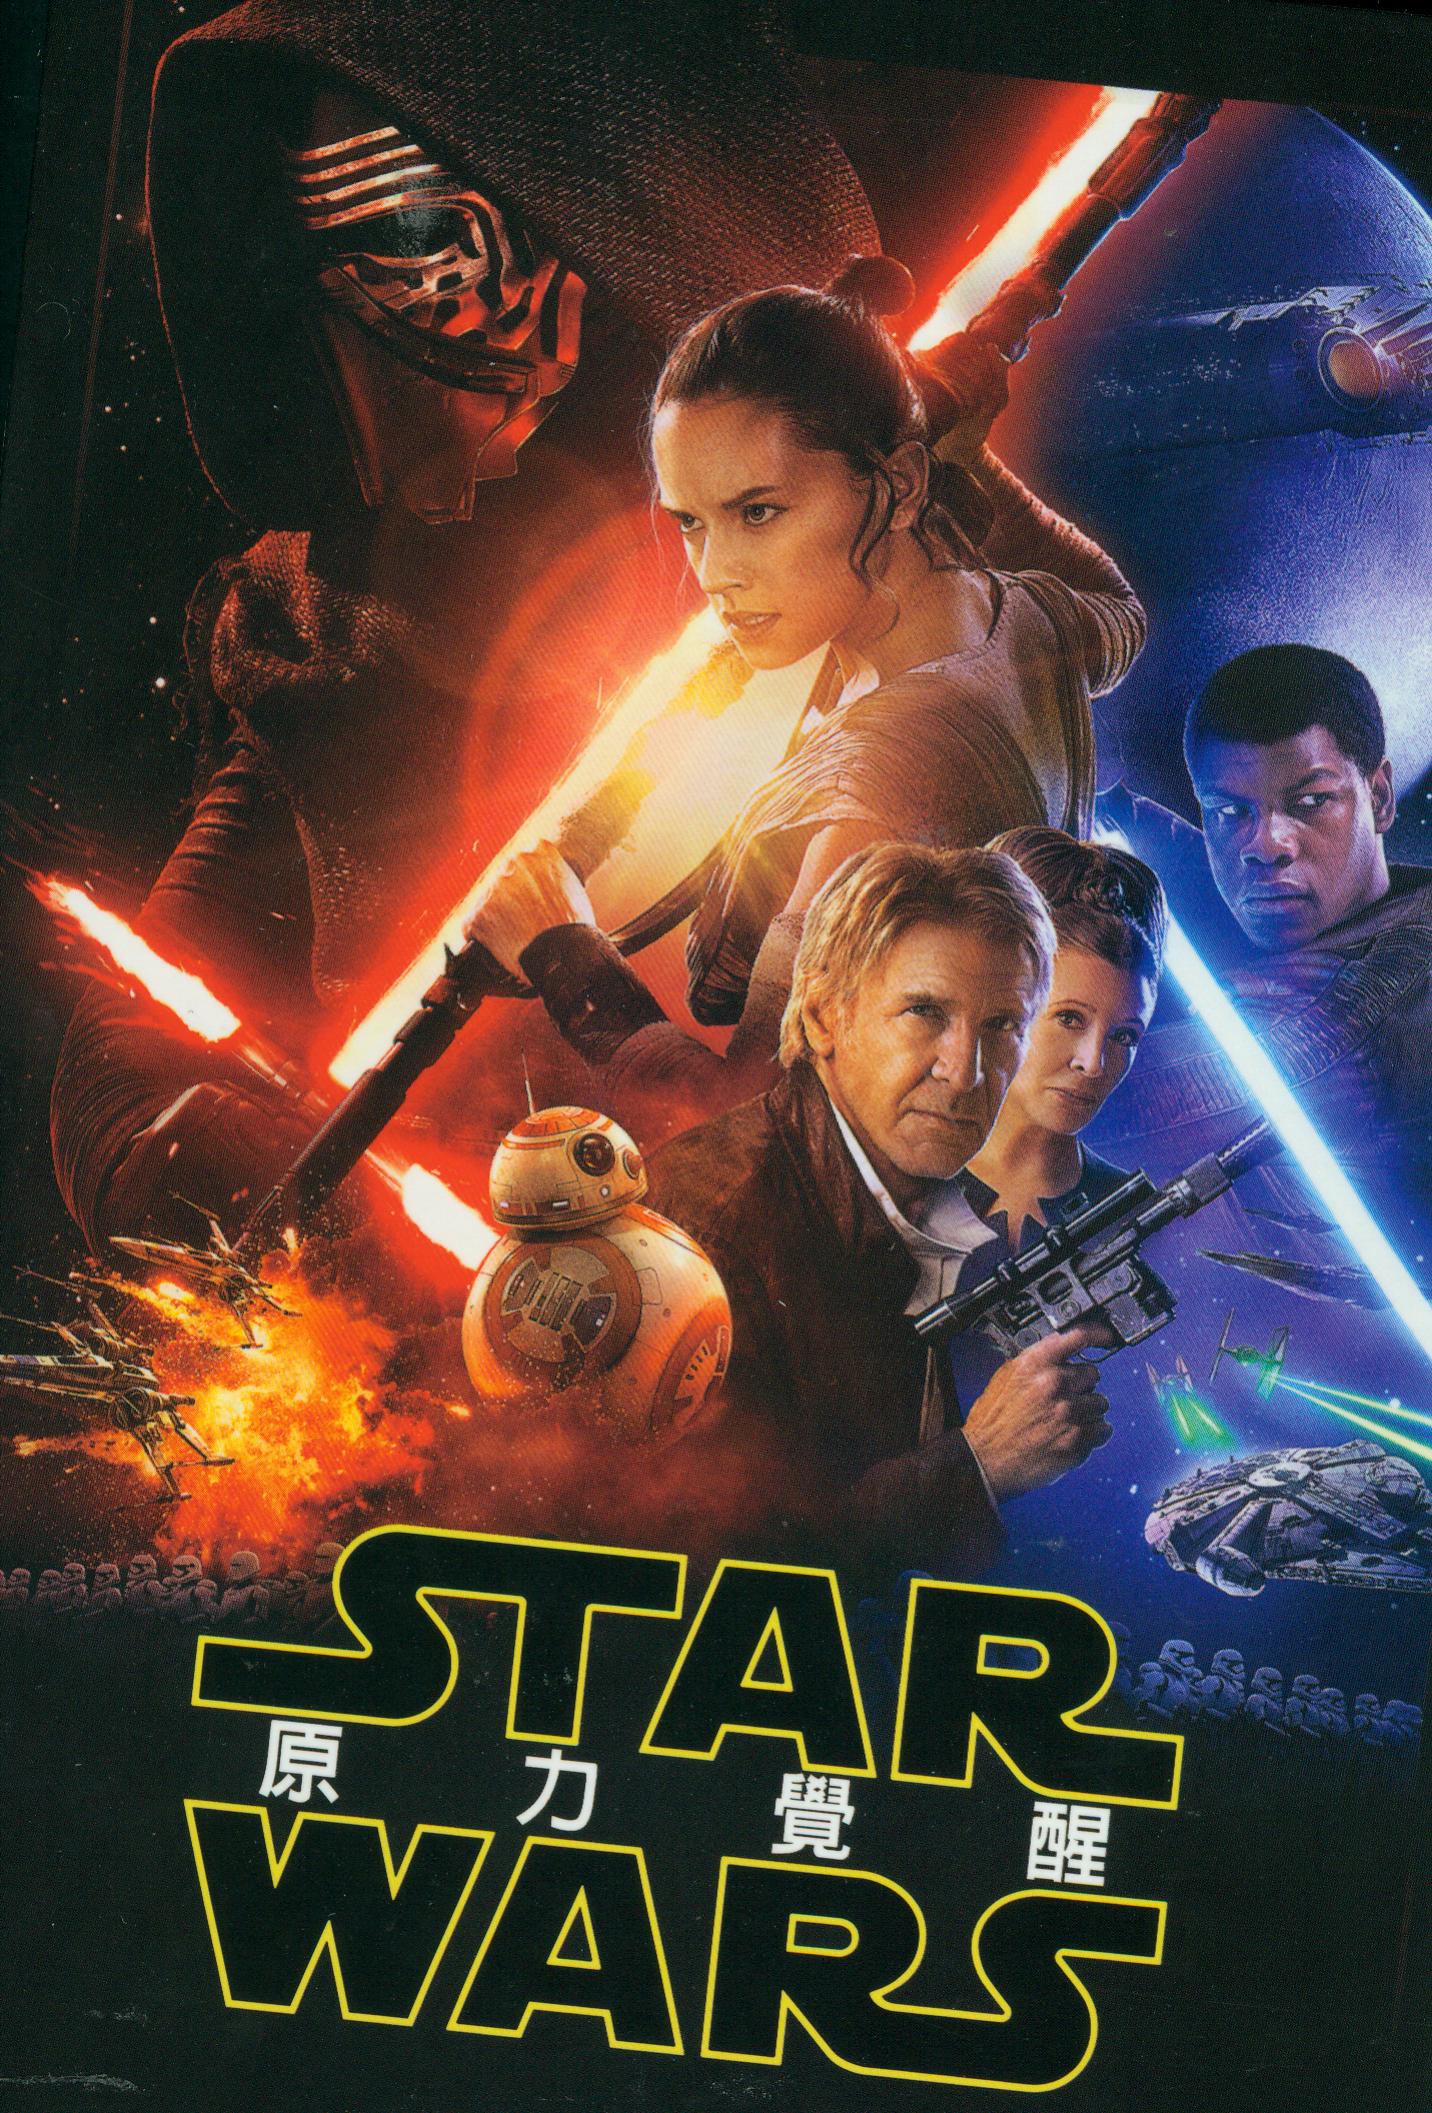 Star wars[普遍級:科幻] : 原力覺醒 = Star Wars : the force awakens